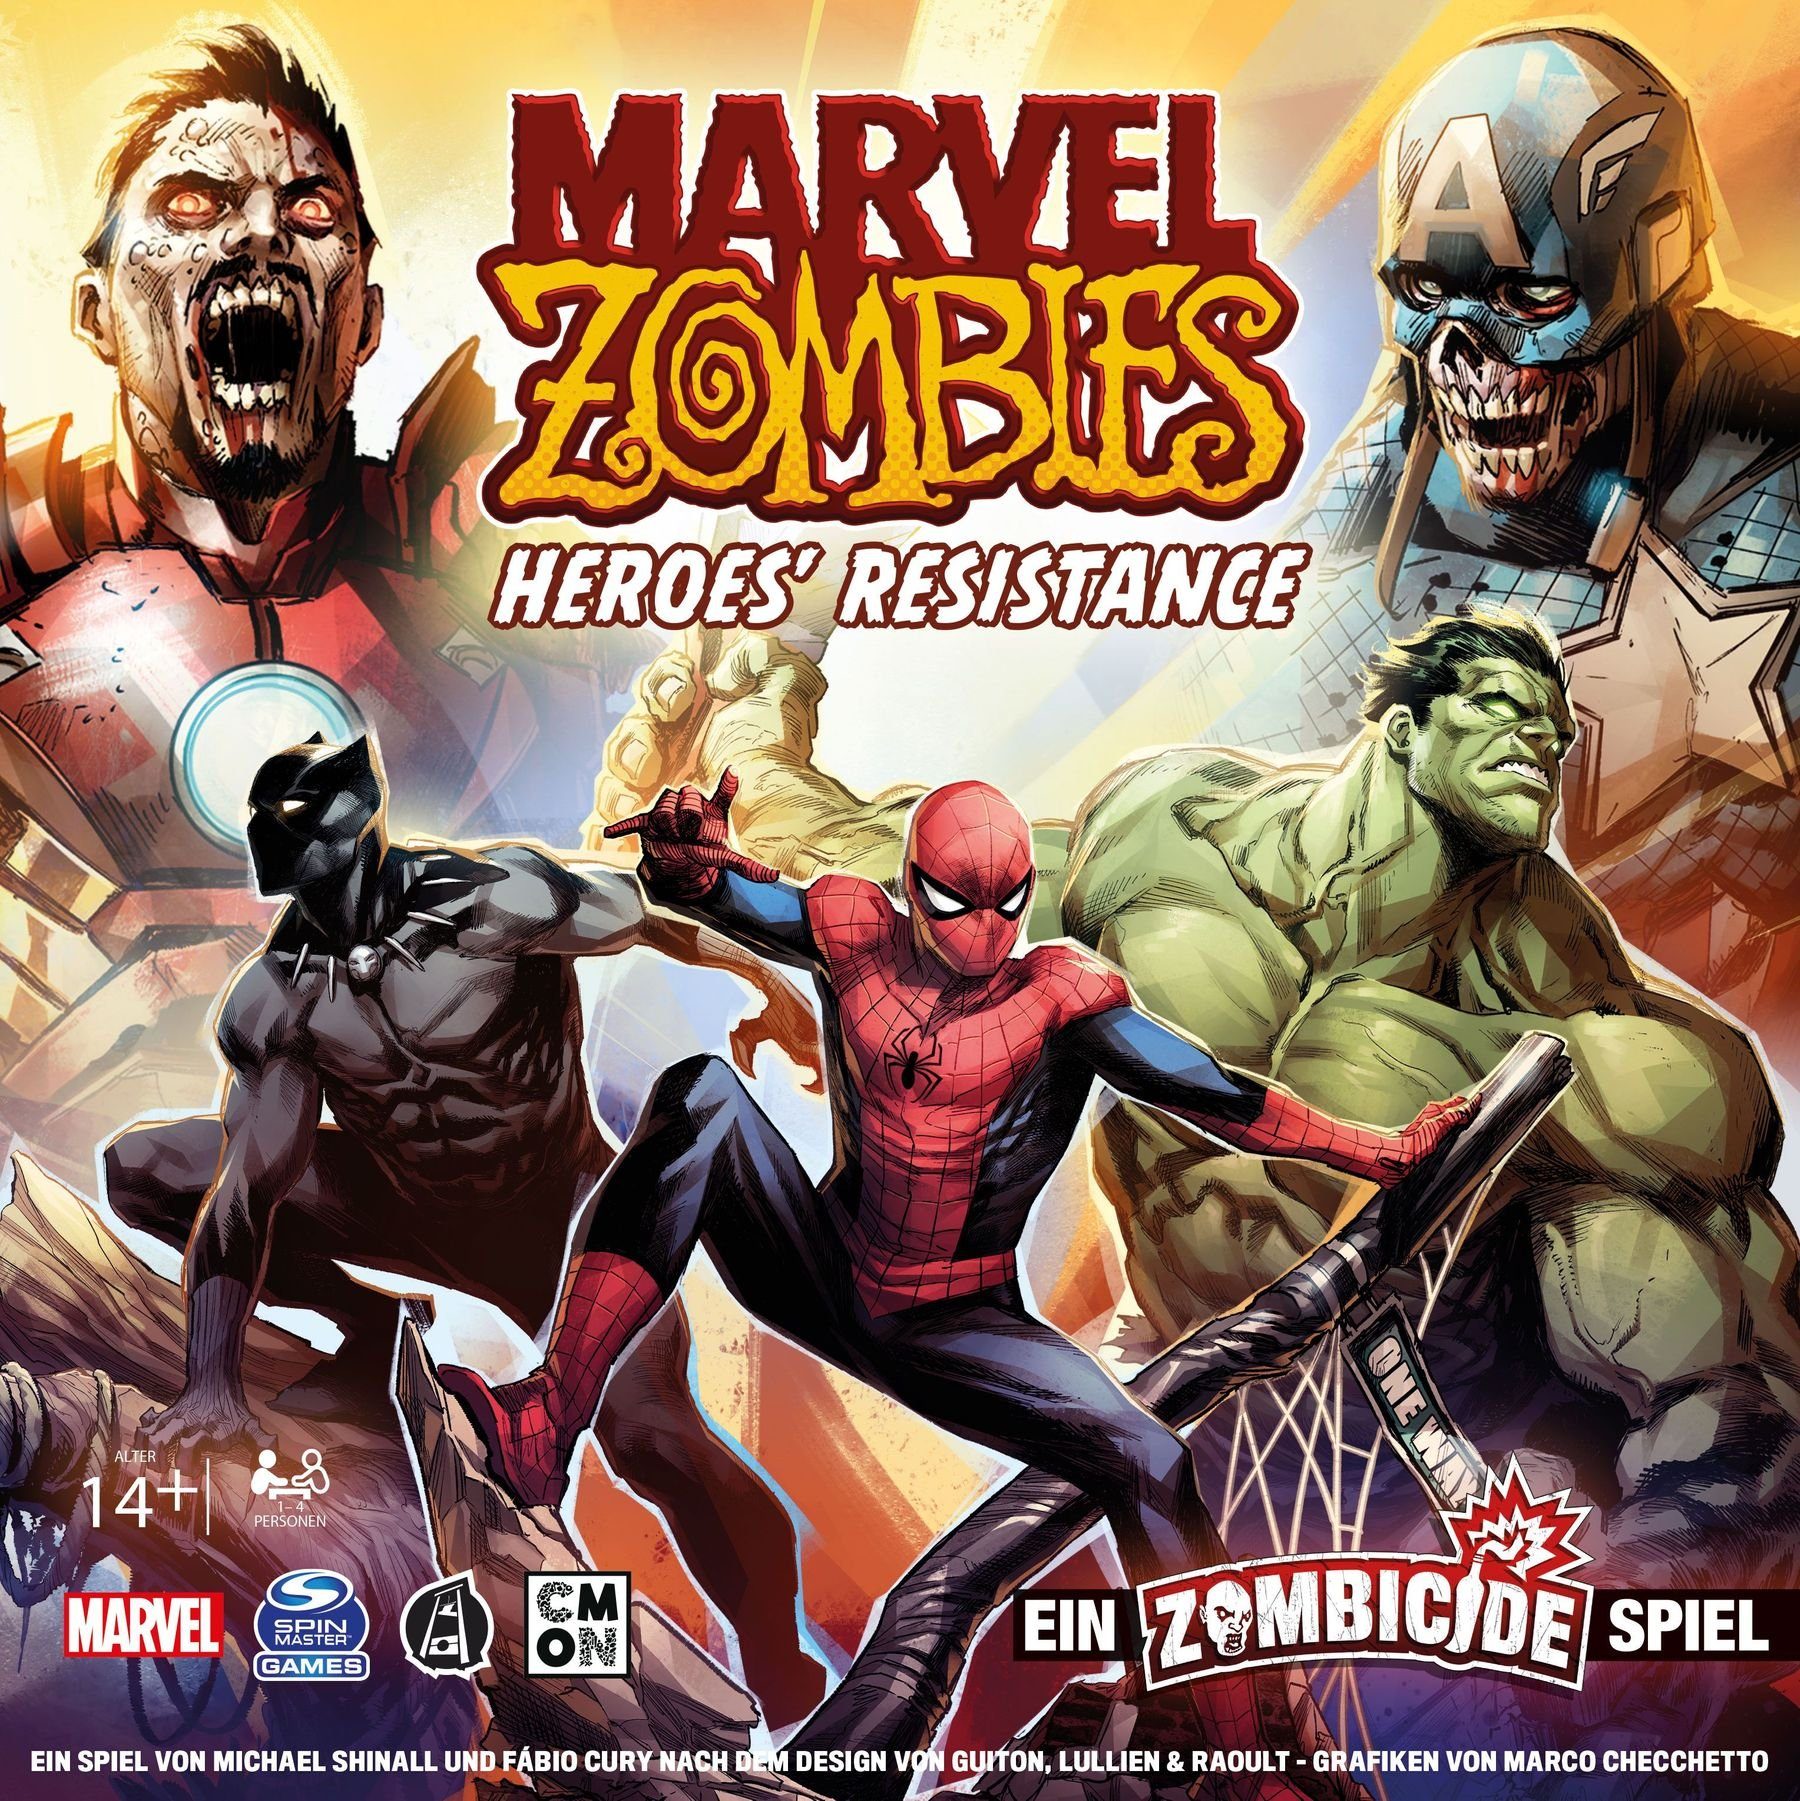 CoolMiniOrNot Spiel, CMON - Marvel Zombies: Heroes‘ Resistance - Ein Zombicide-Spiel CMON - Marvel Zombies: Heroes‘ Resistance - Ein Zombicide-Spiel